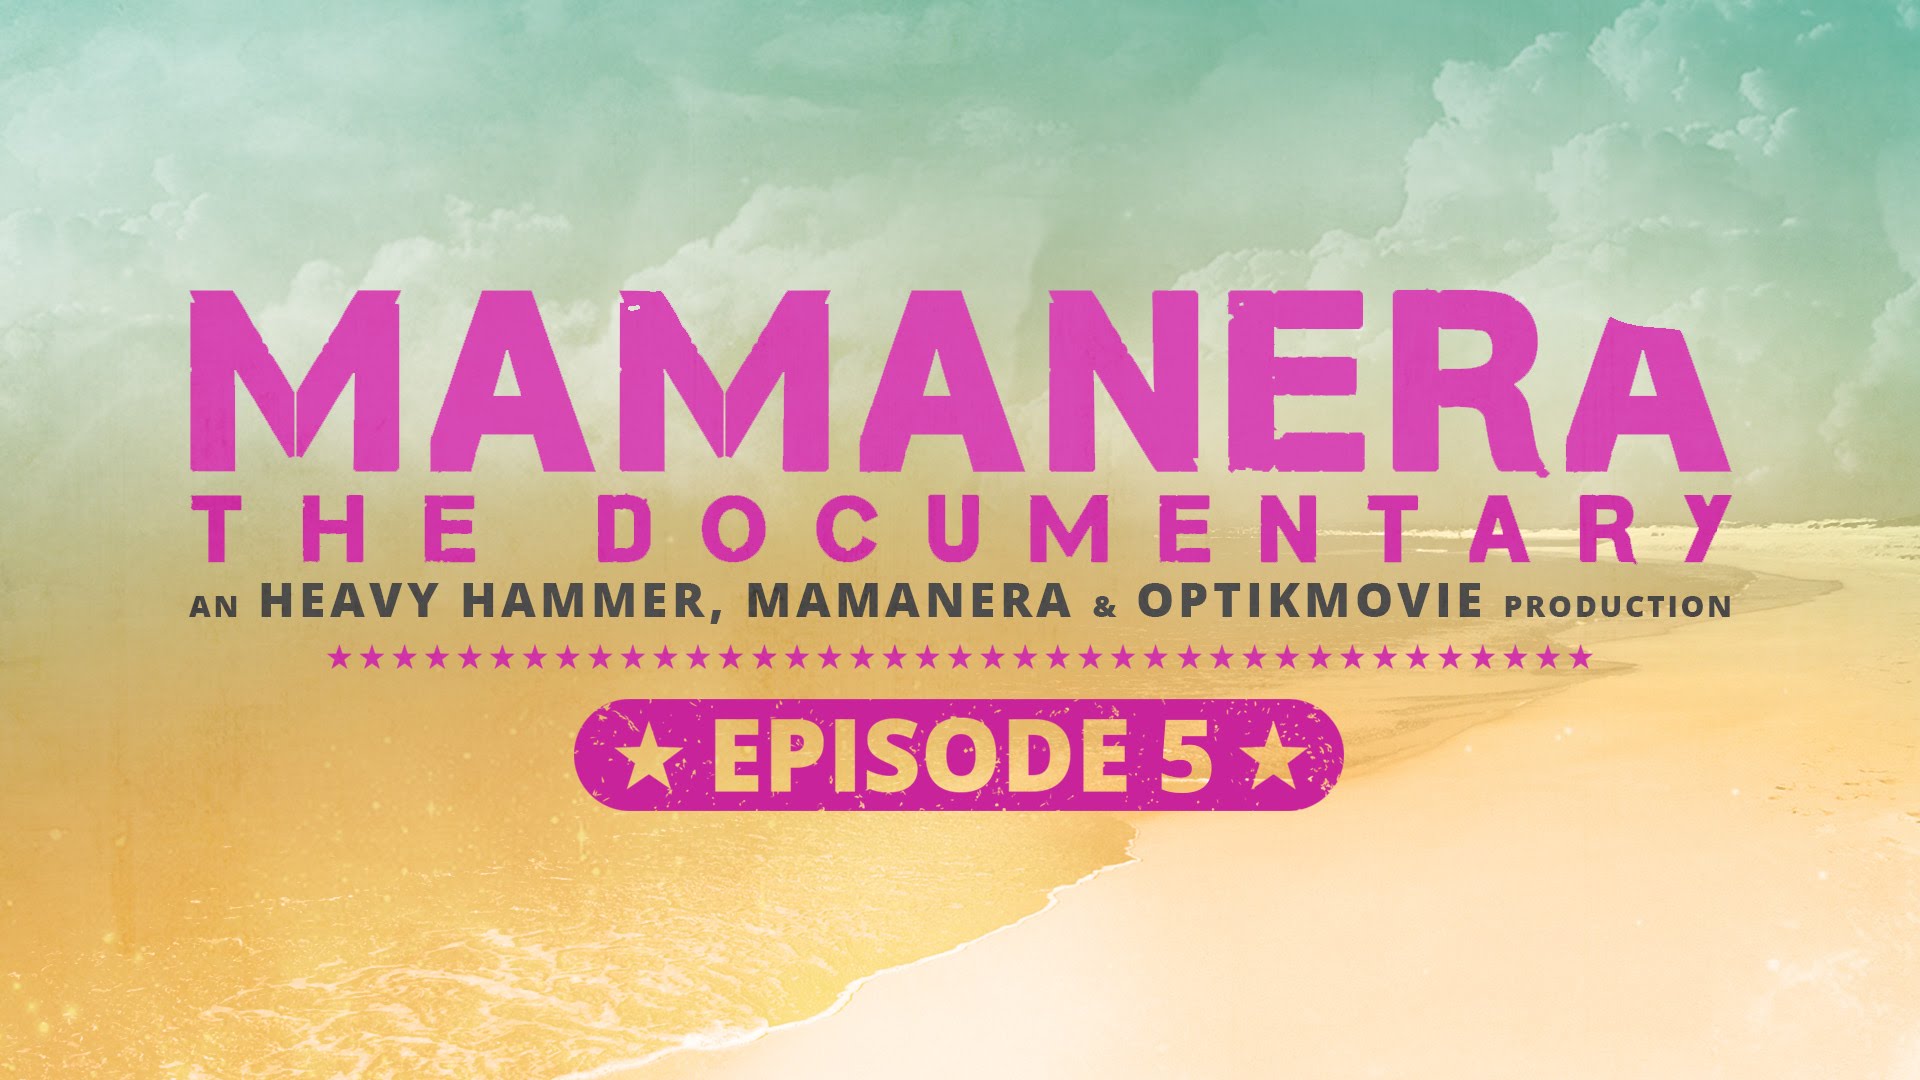 Mamanera - The Documentary Episode 5 [9/24/2014]